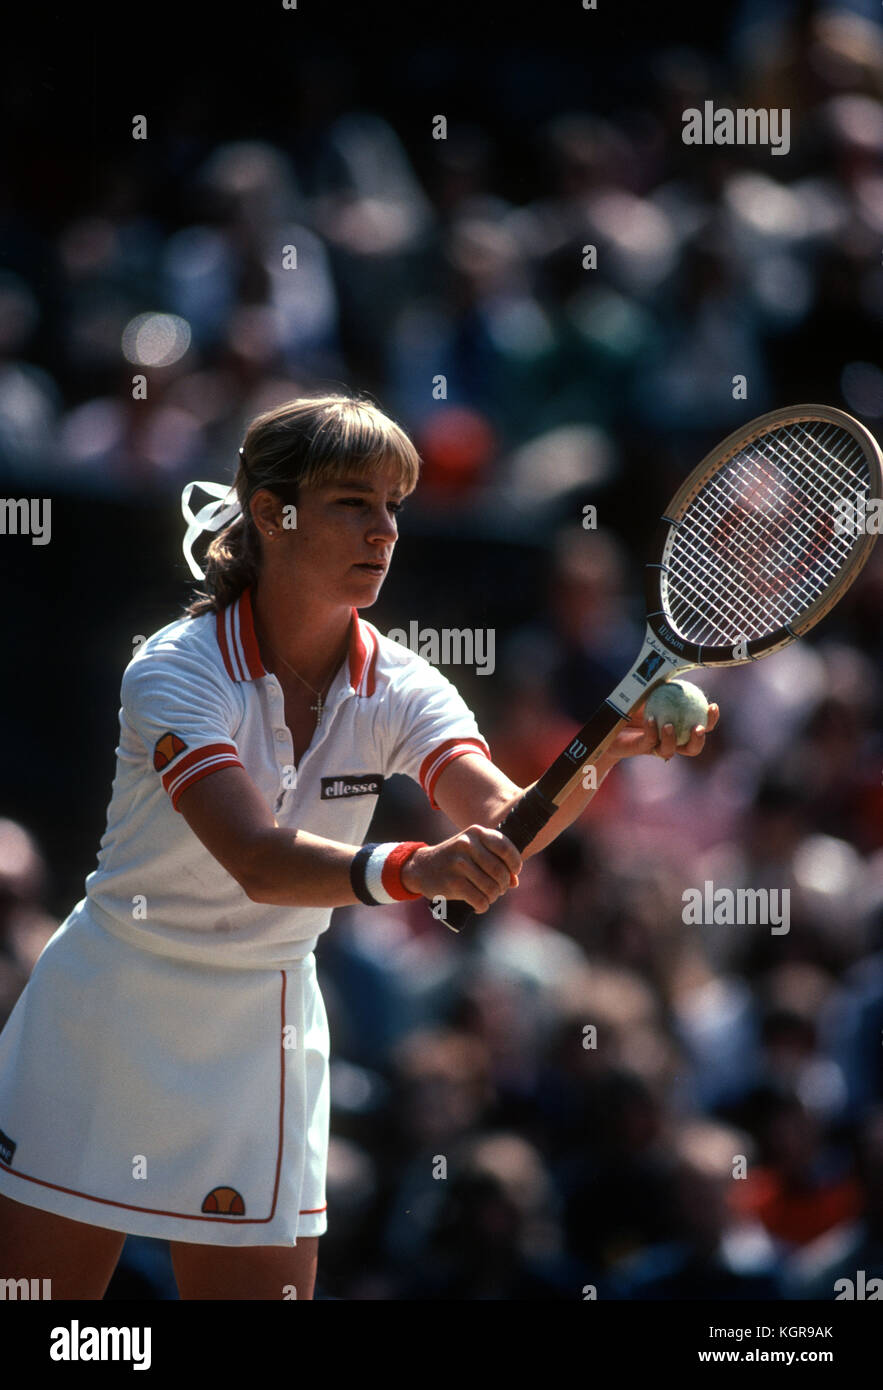 Chris Evert à Wimbledon, c. 1980 Banque D'Images